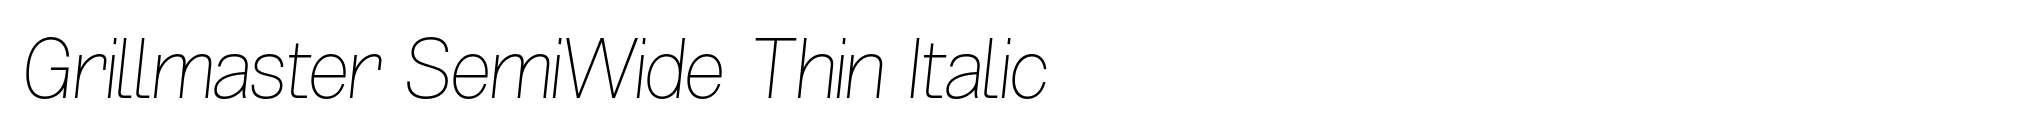 Grillmaster SemiWide Thin Italic image